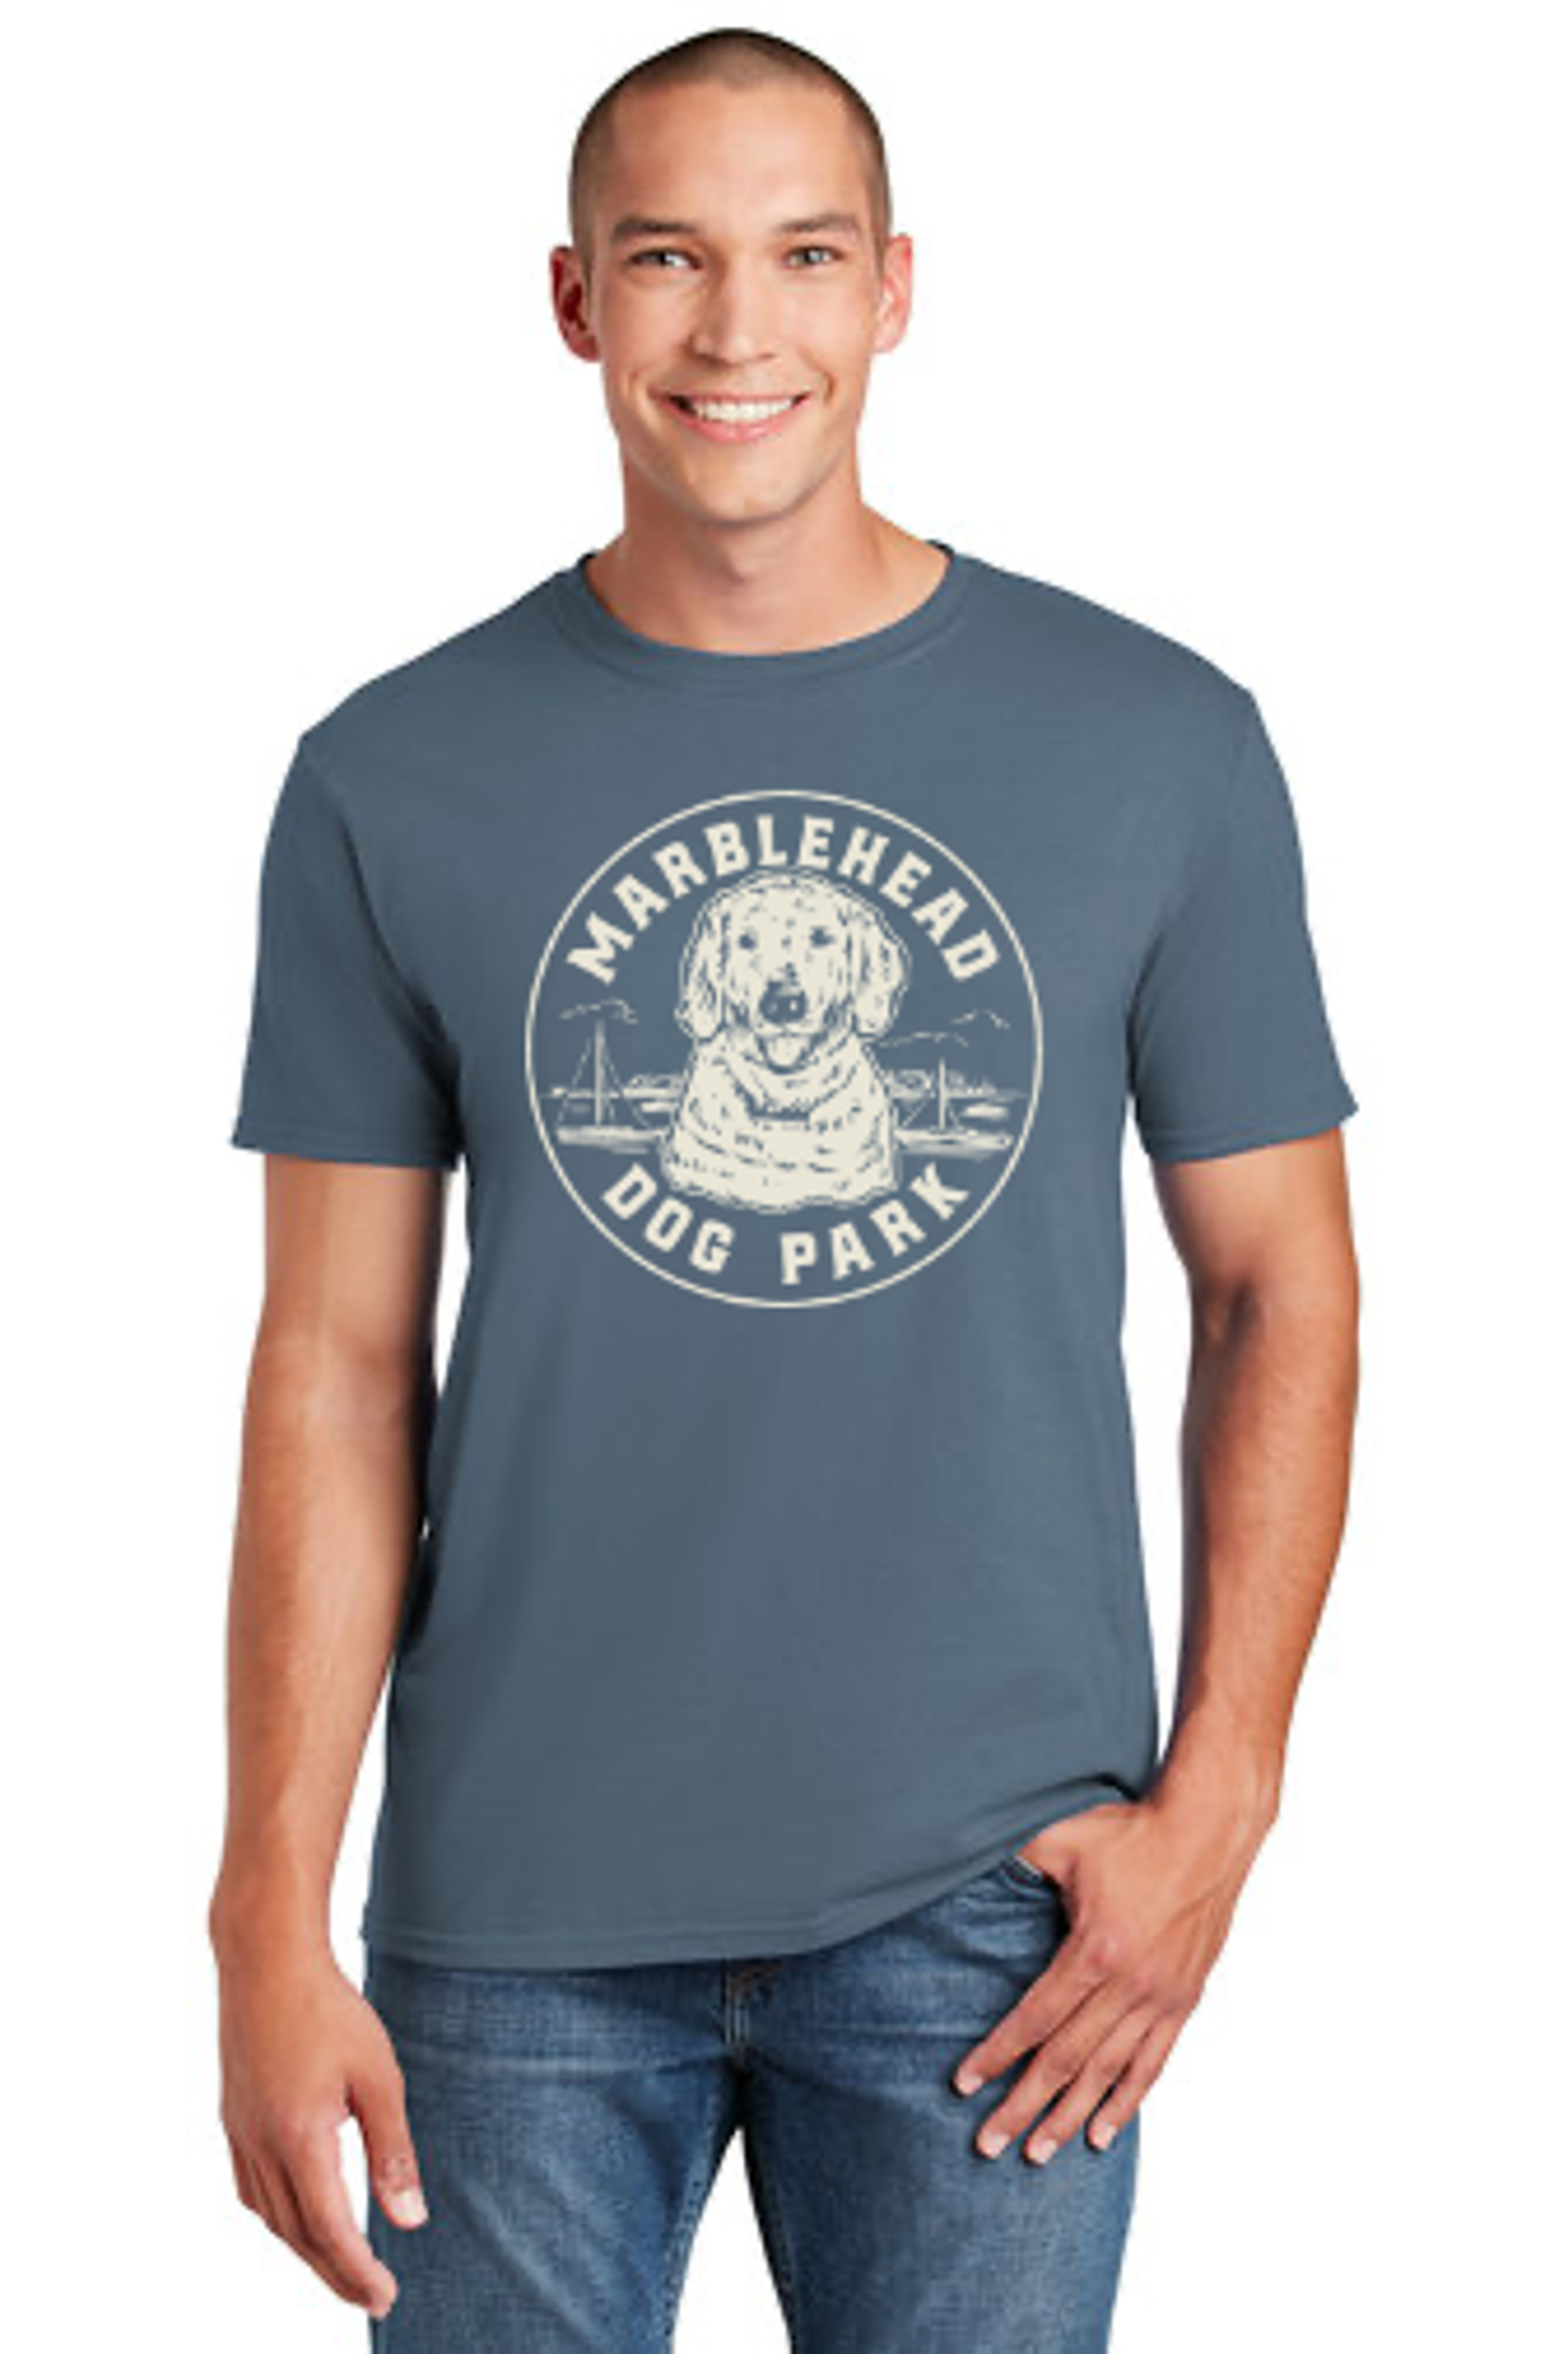 Marblehead Dog Park SoftStyle Tee-Shirt